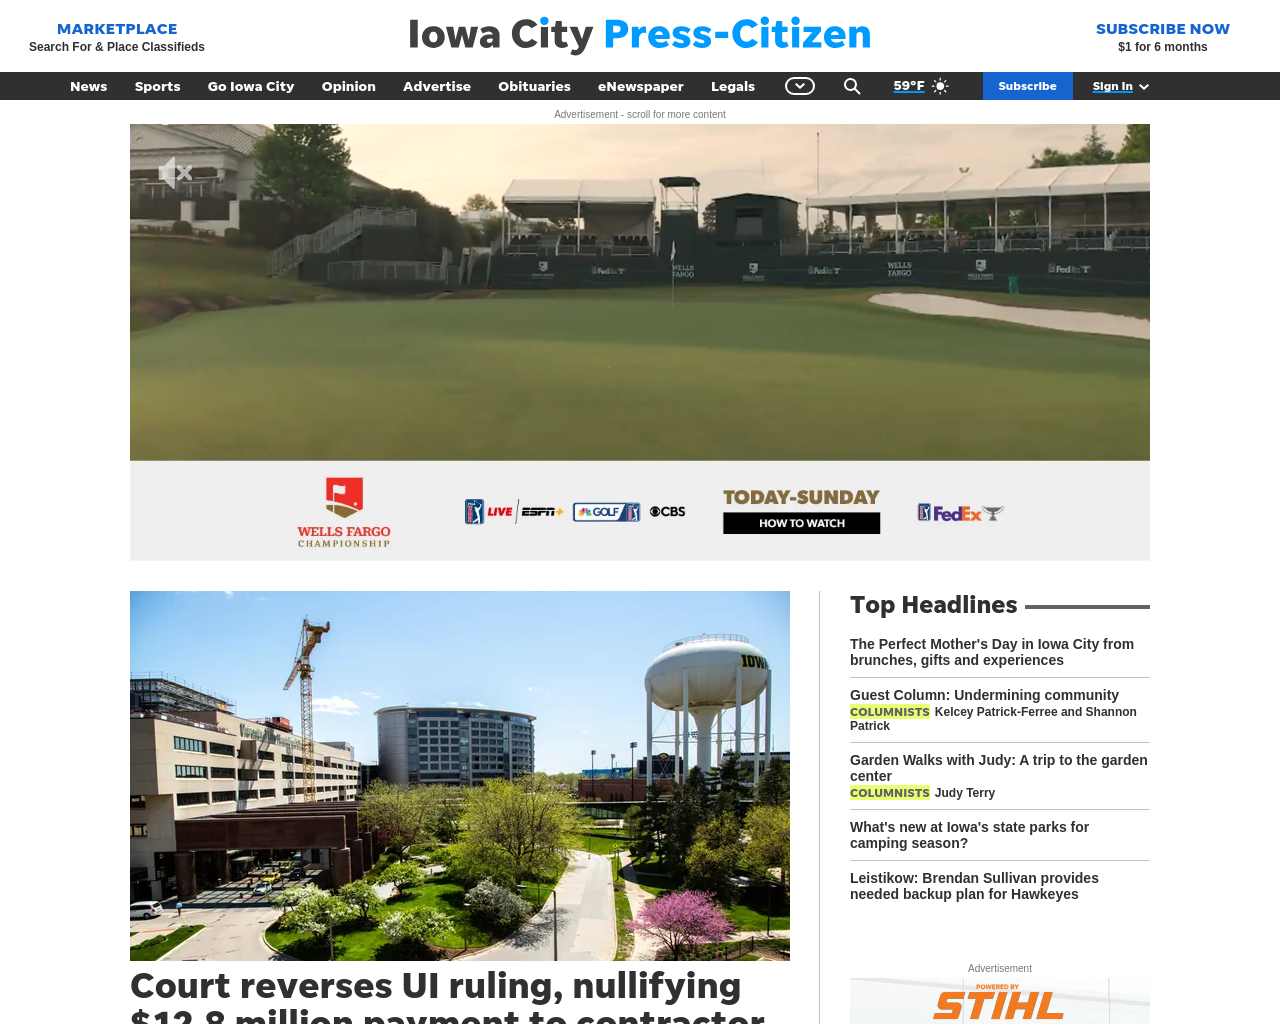 press-citizen.com